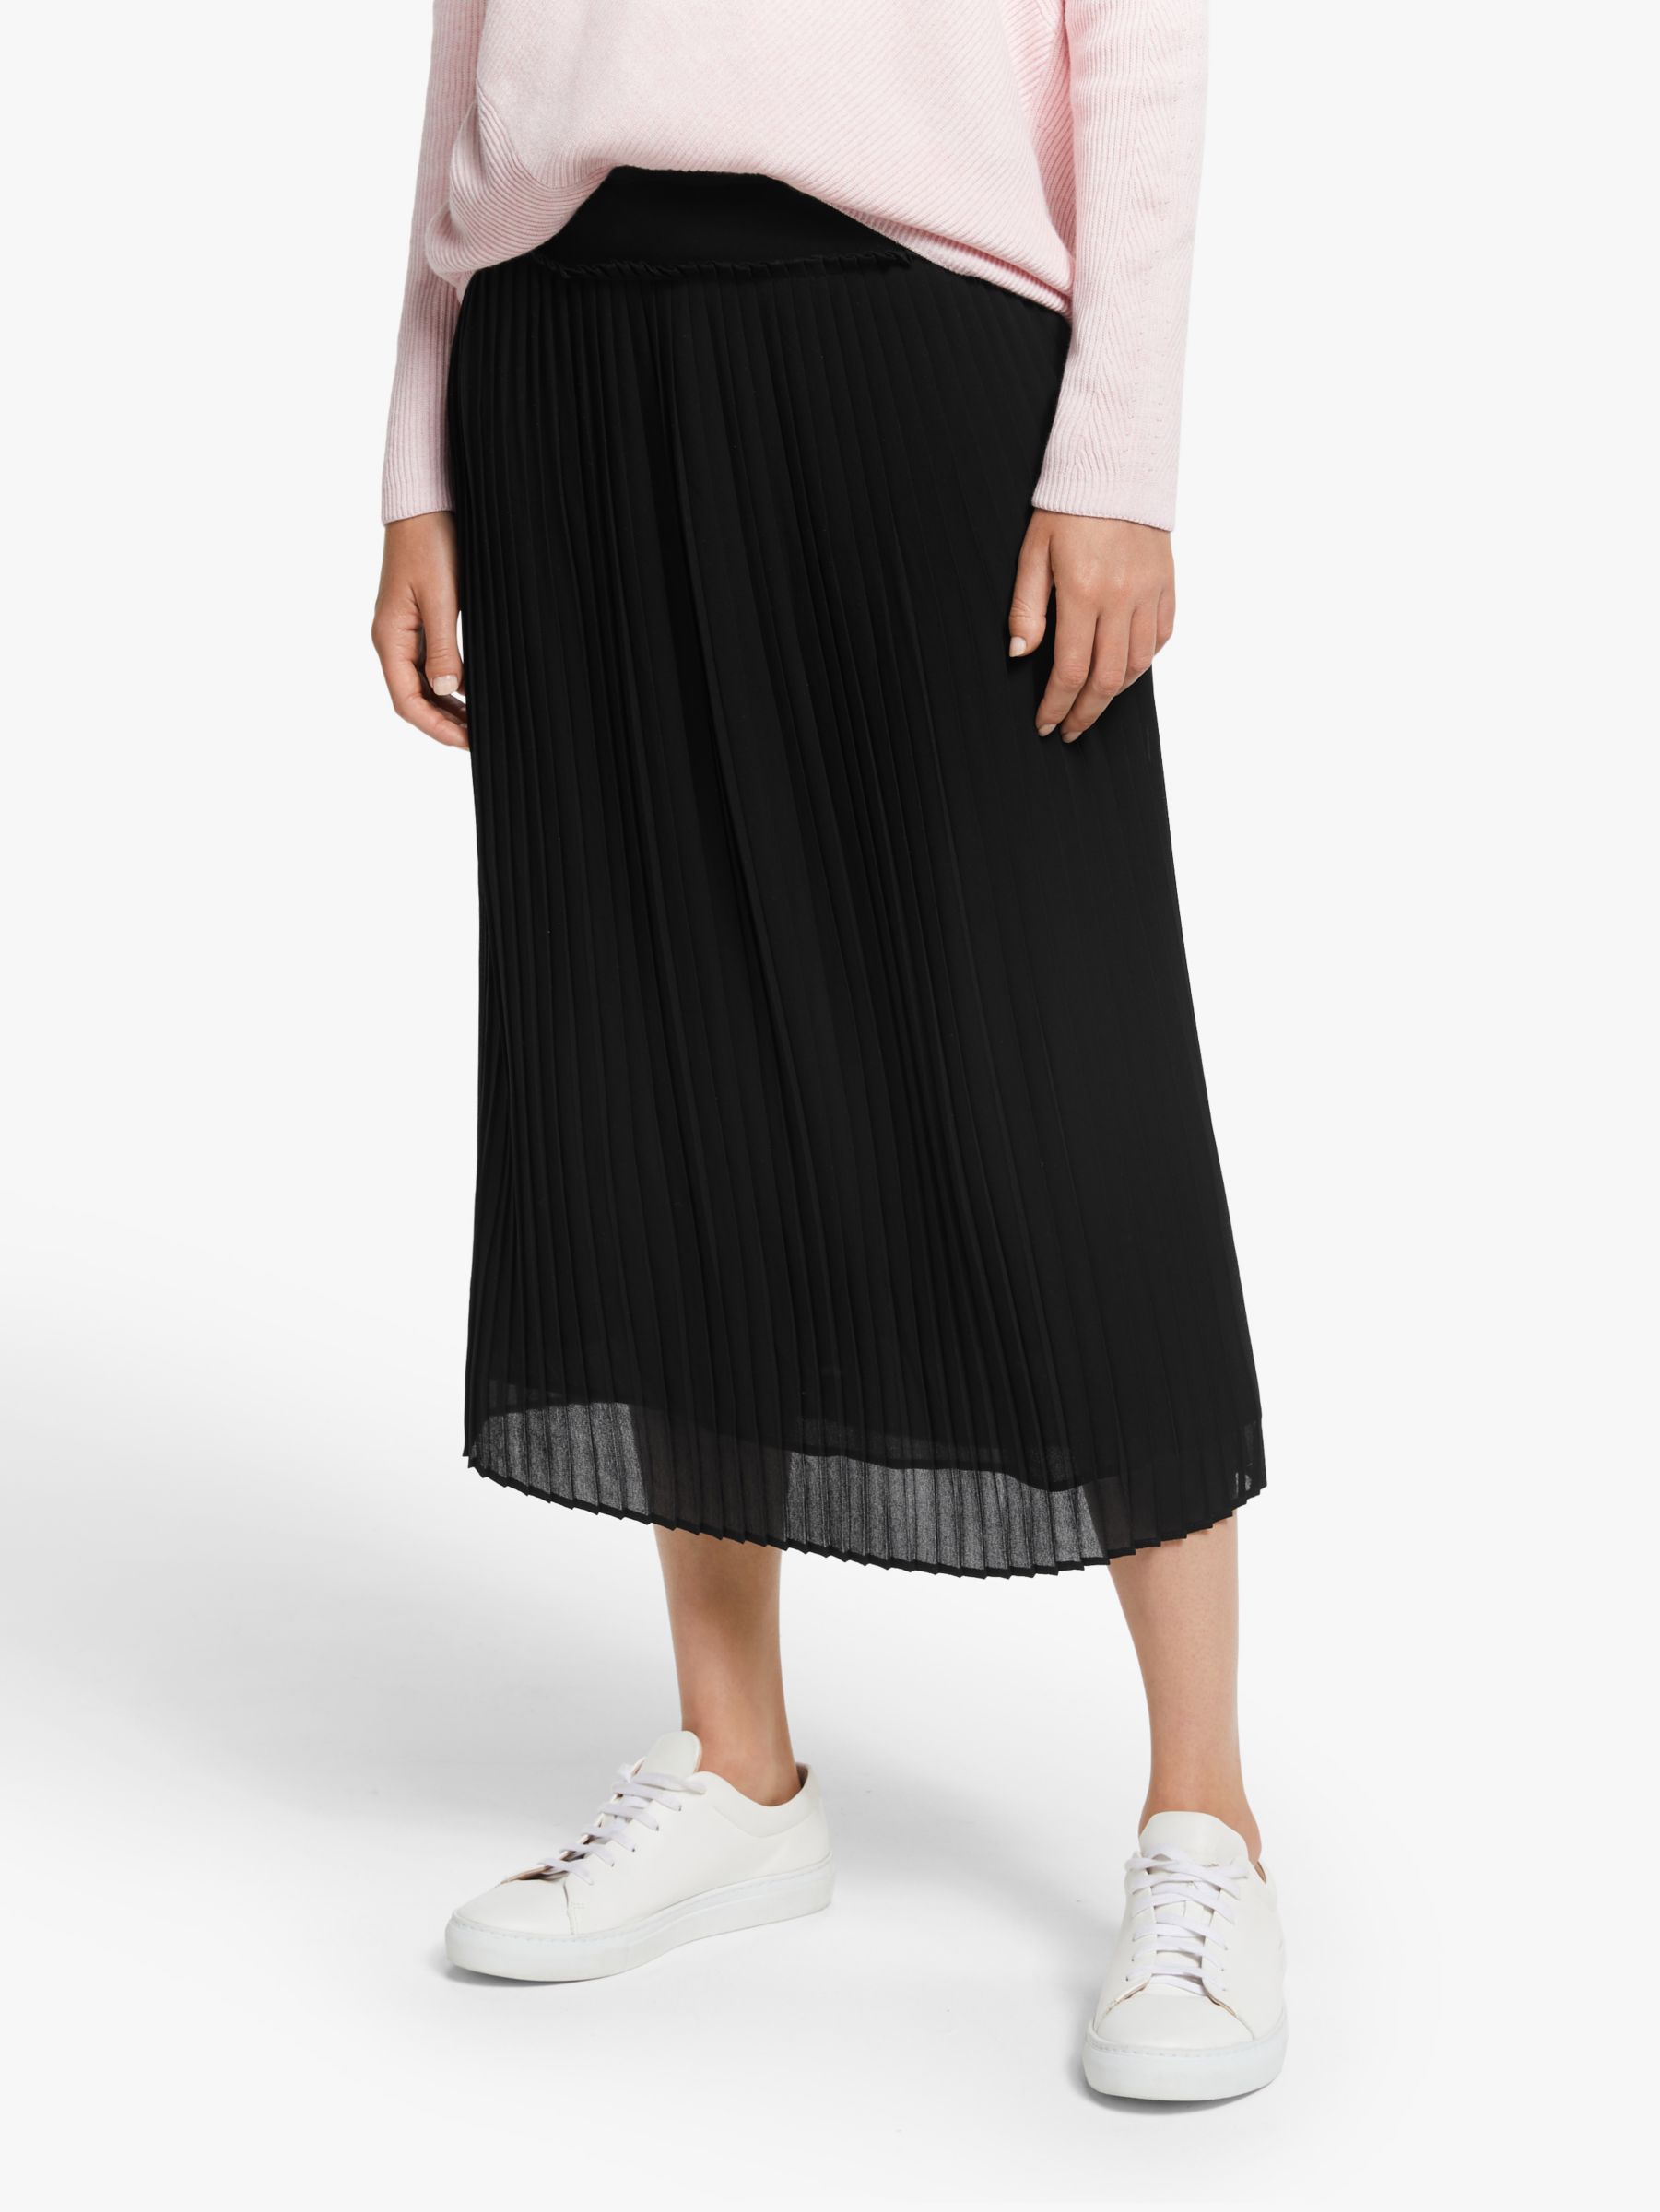 John Lewis & Partners Micro Pleat Midi Skirt, Black